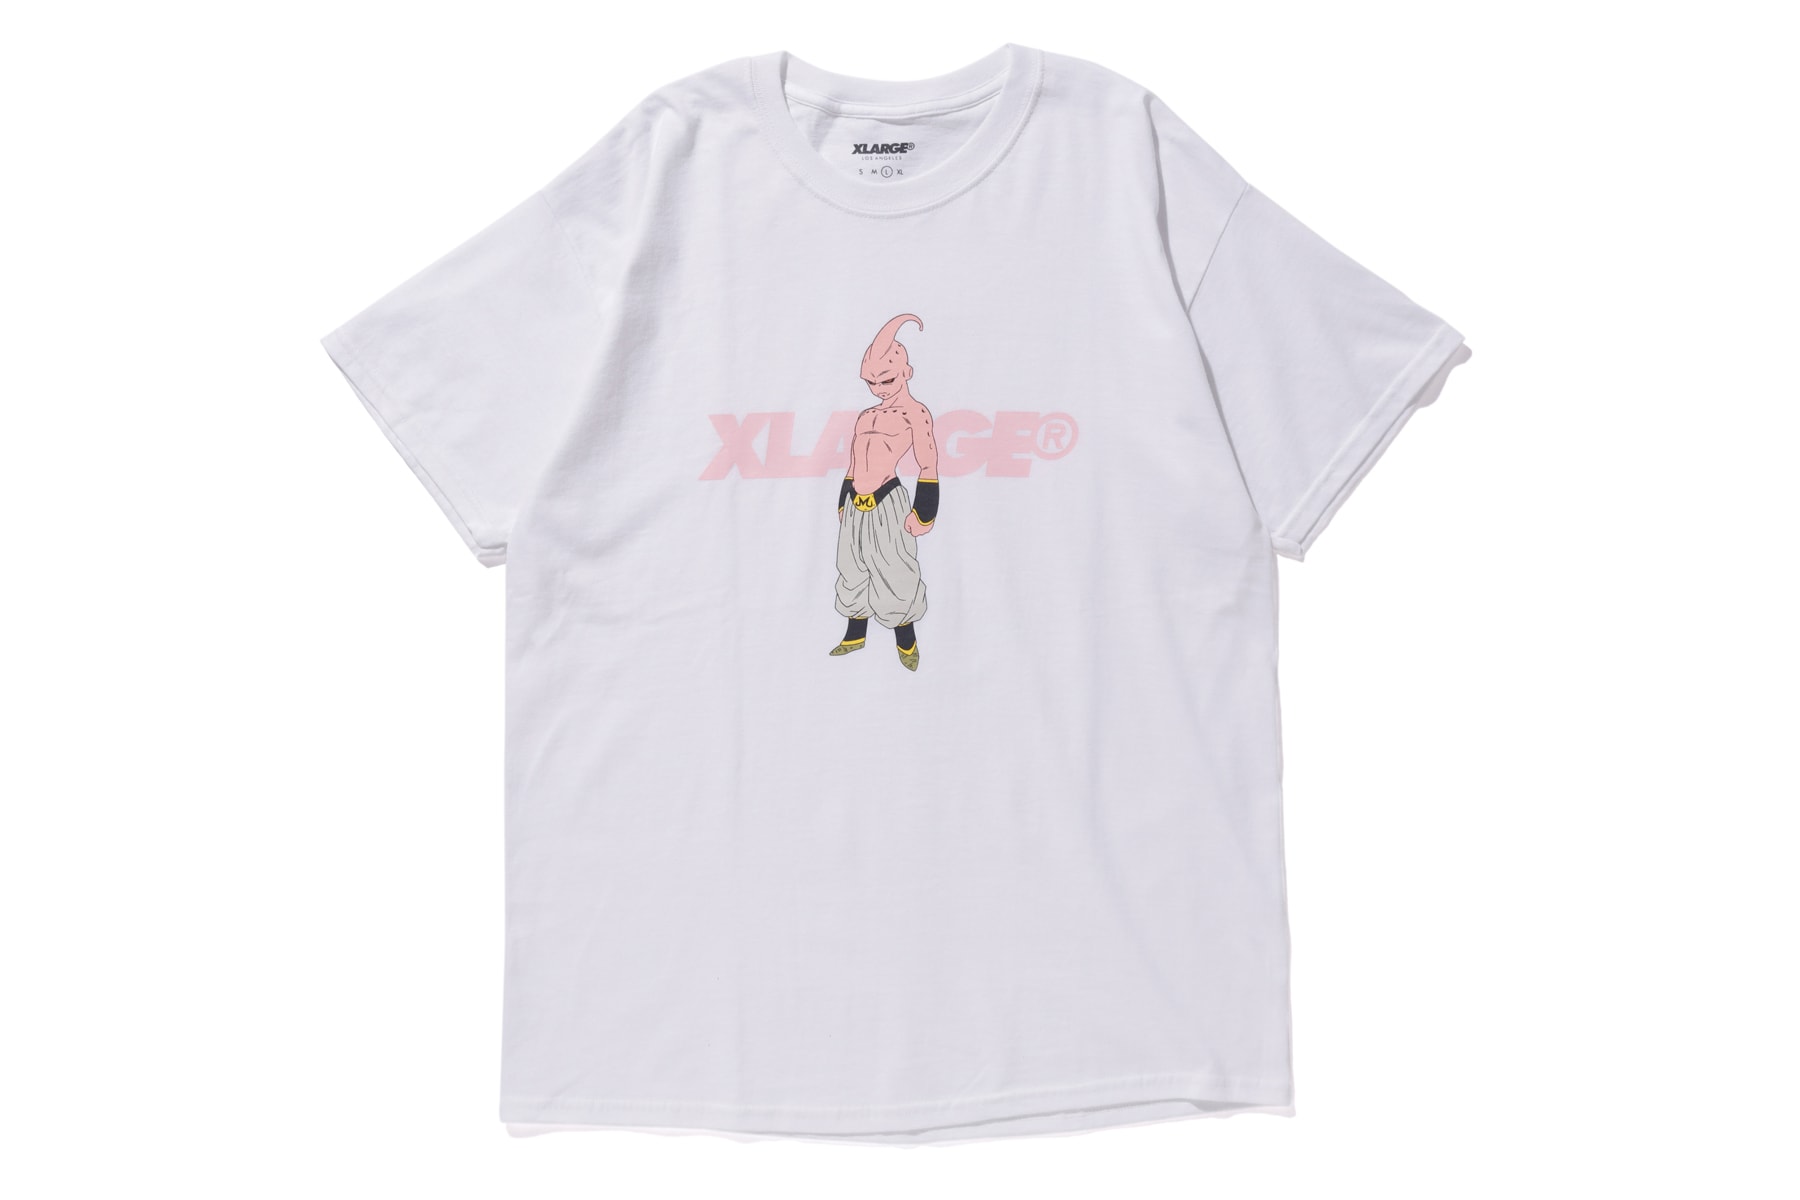 Dragon Ball Z XLARGE Capsule Collection Short Sleeve T shirt Kid Buu Trunk Bulma